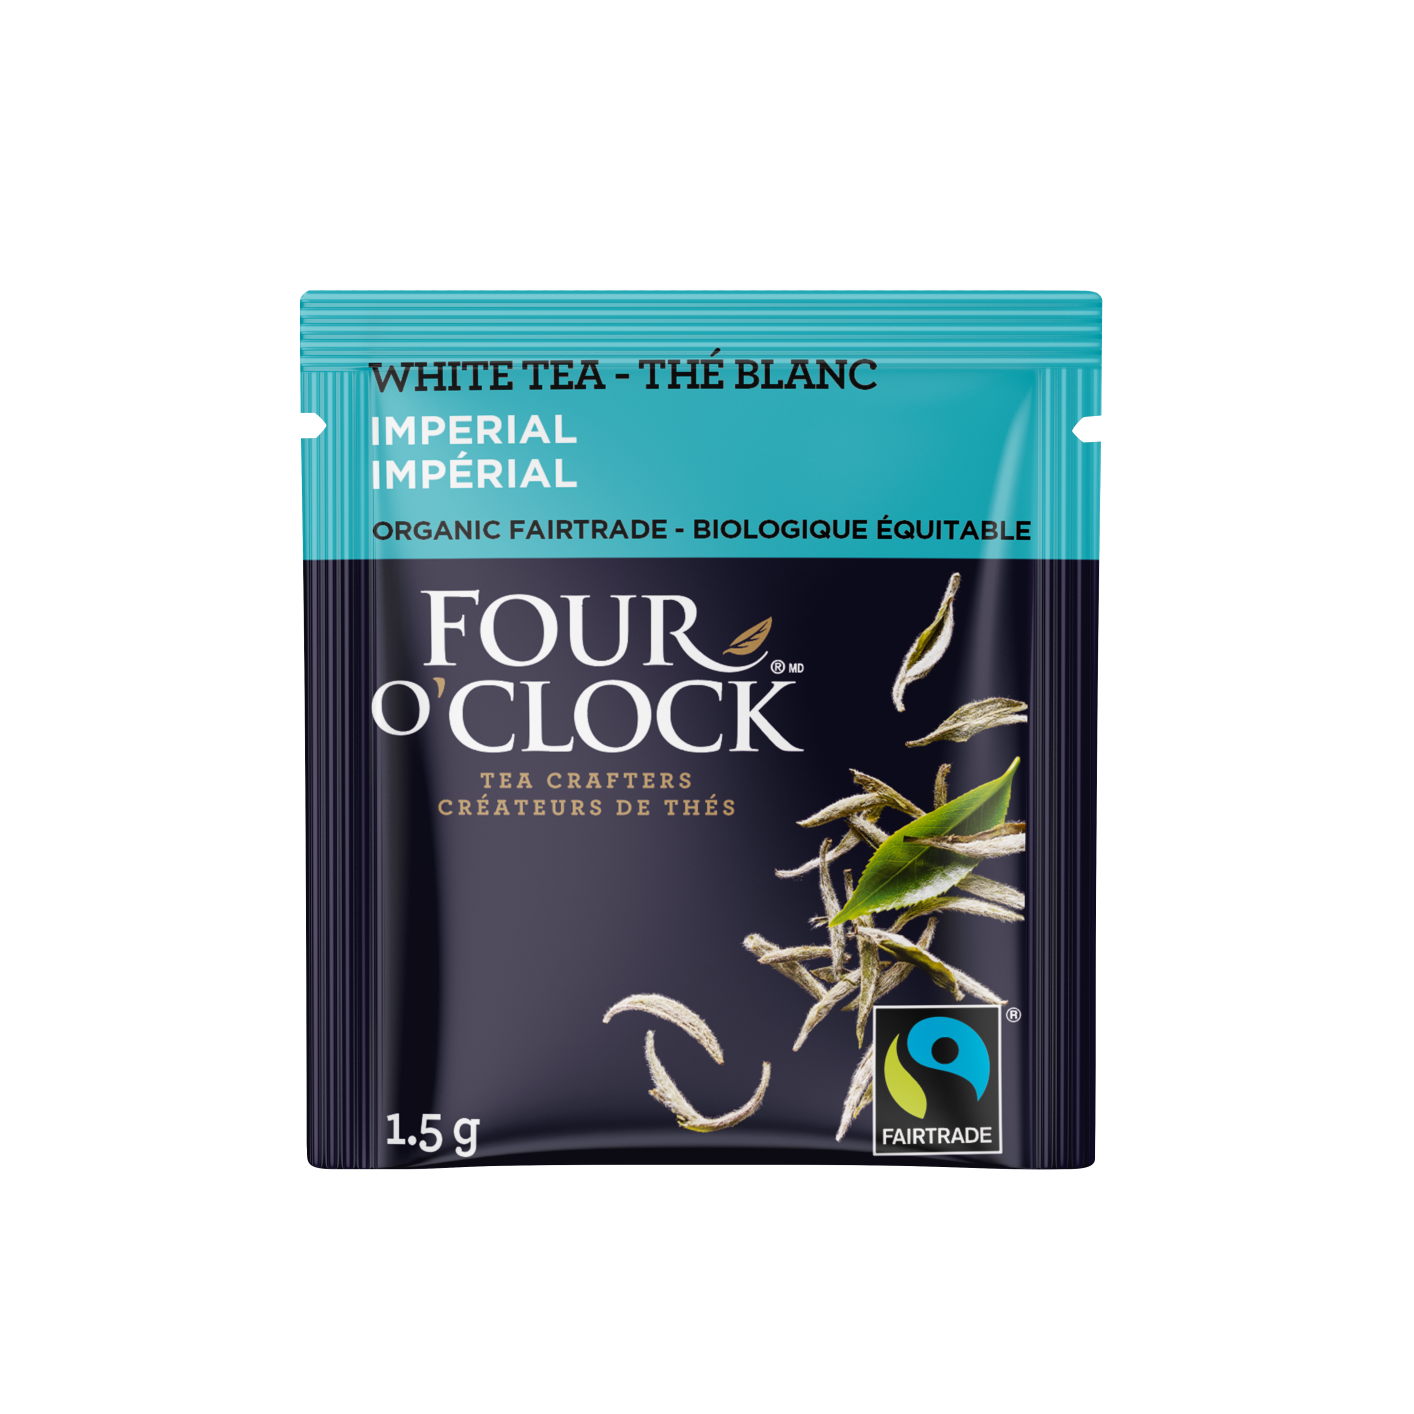 Imperial Organic Fairtrade White Tea